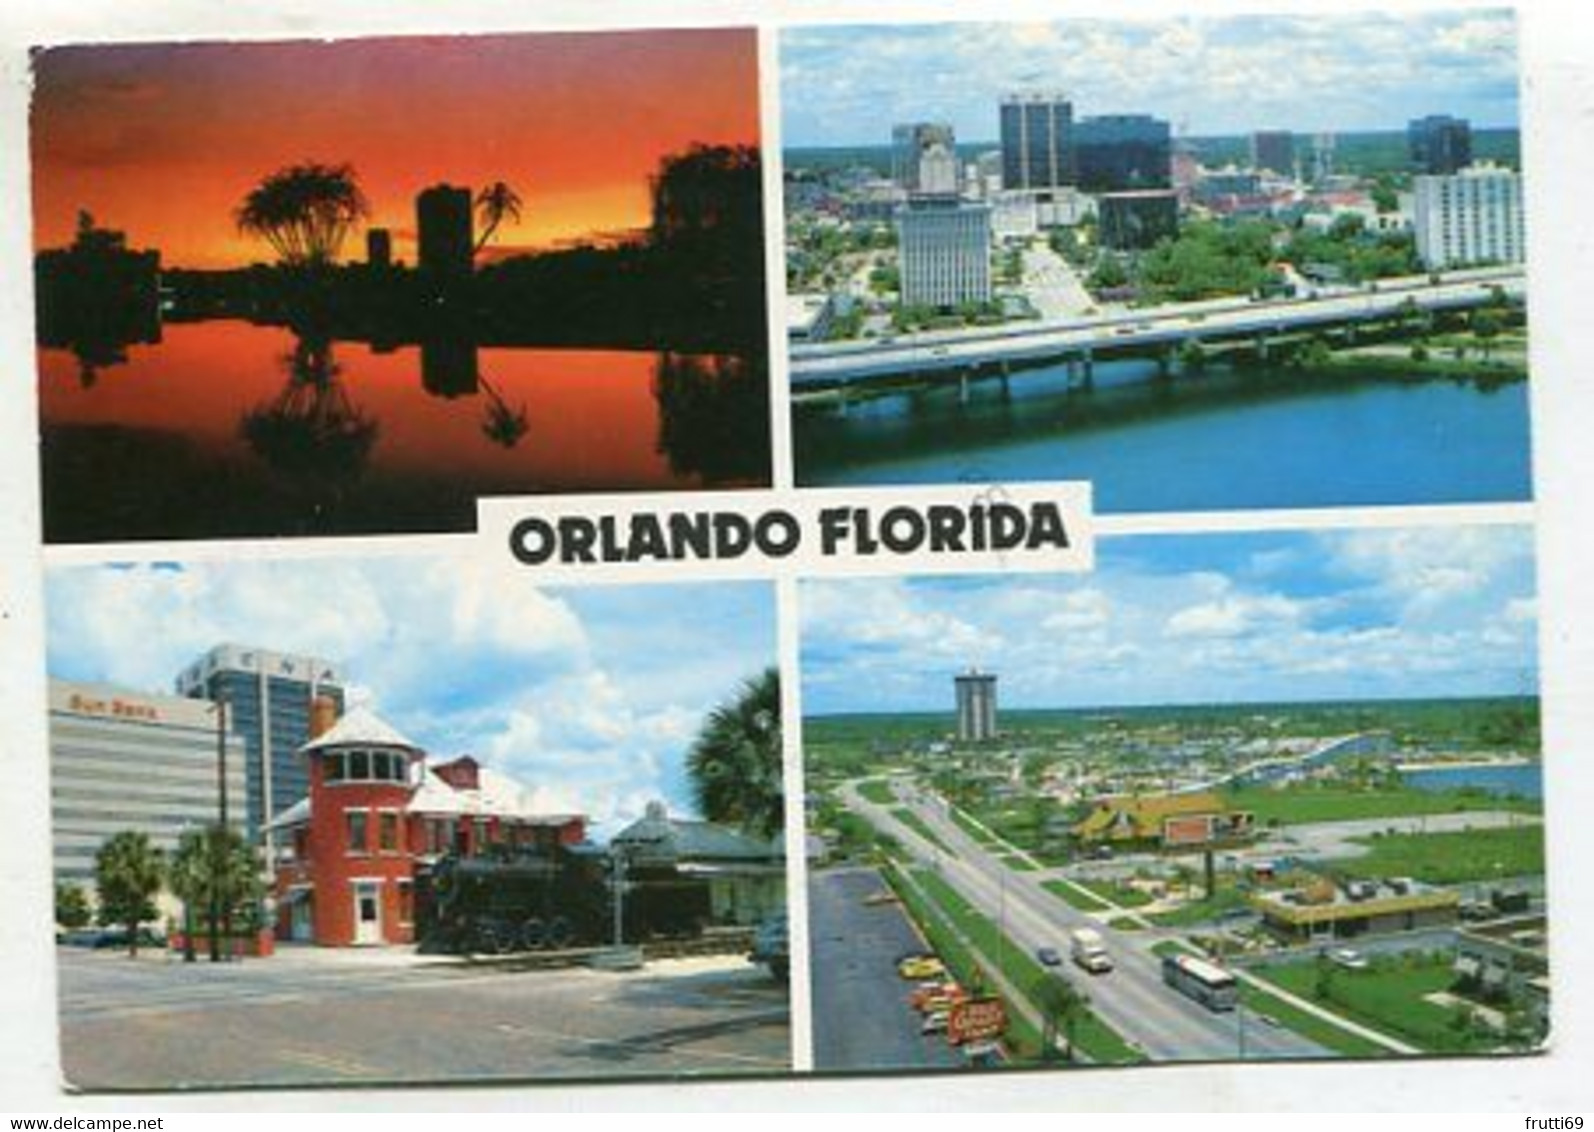 AK 111396 USA - Florida - Orlando - Orlando